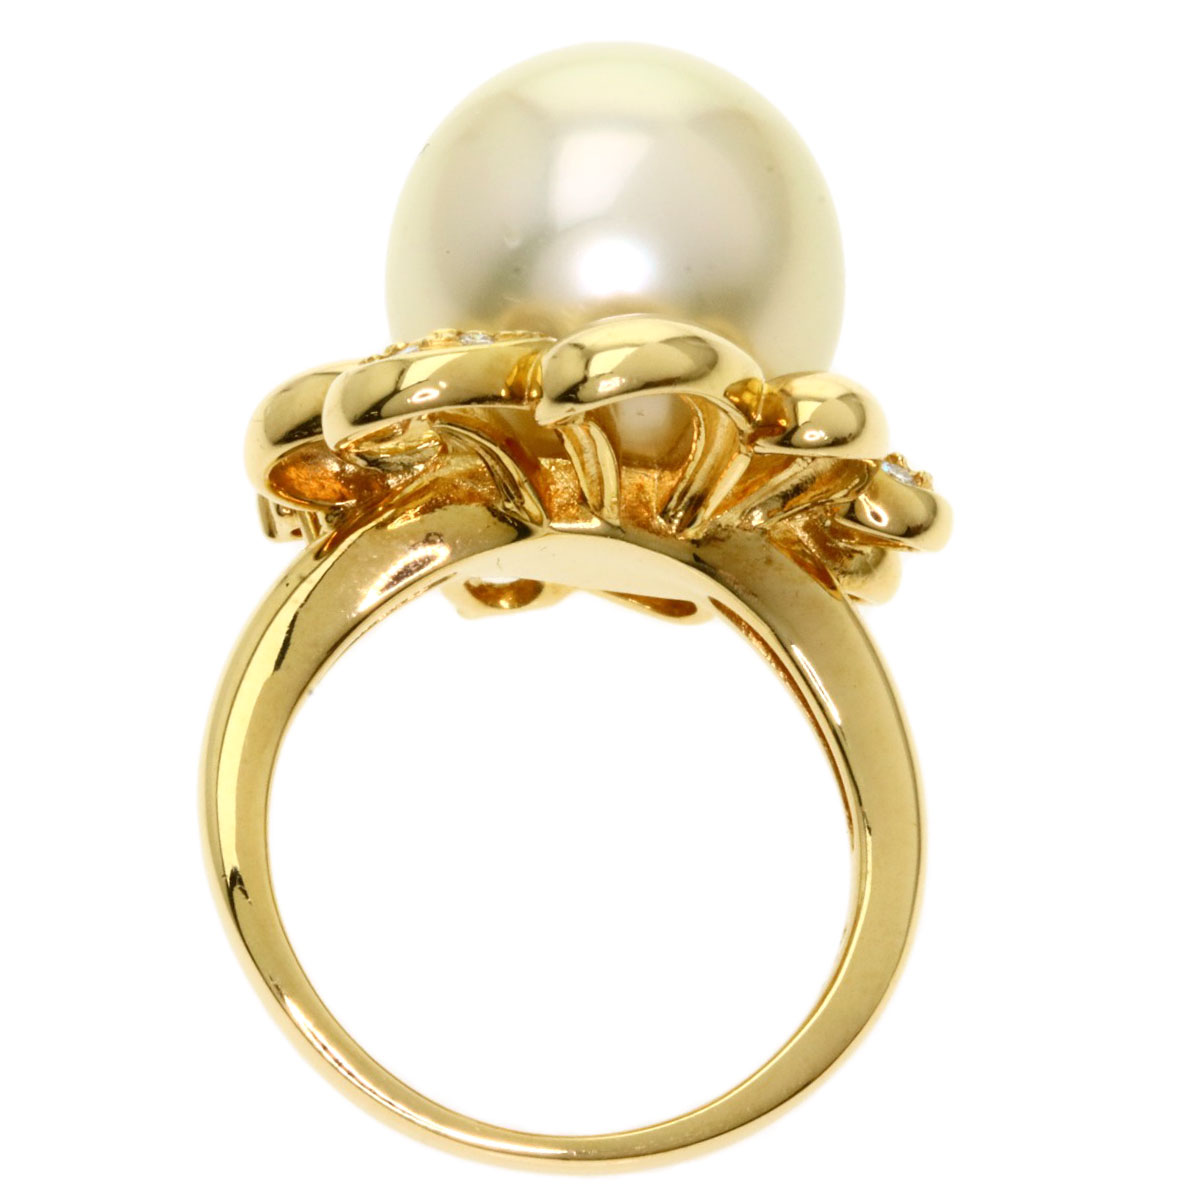 TASAKI Ring South Sea Pearl Pearl Diamond K18 Yellow Gold | eBay